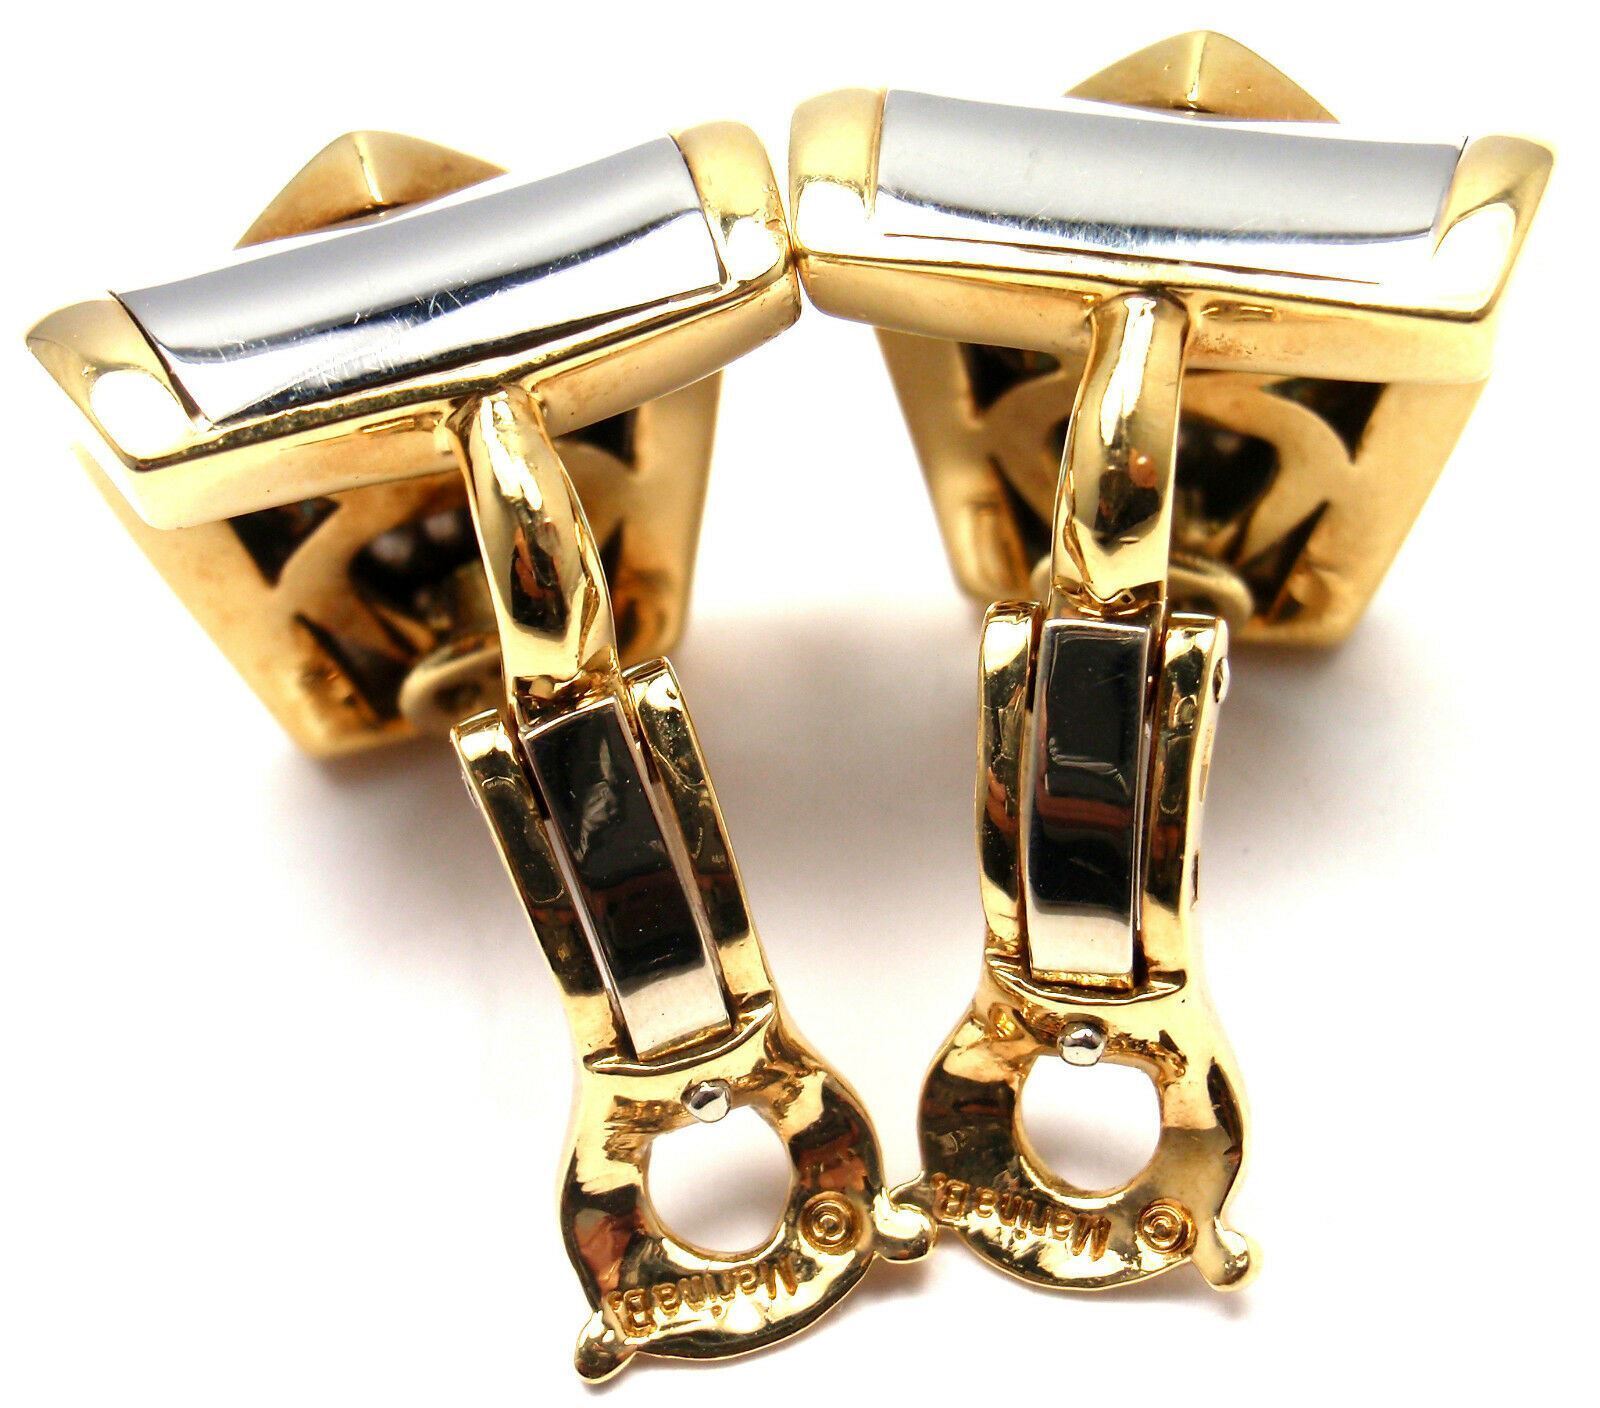 Marina B Jewelry & Watches:Fine Jewelry:Earrings Authentic! Marina B 18k Yellow Gold & Stainless Steel Blue Topaz Heart Earrings